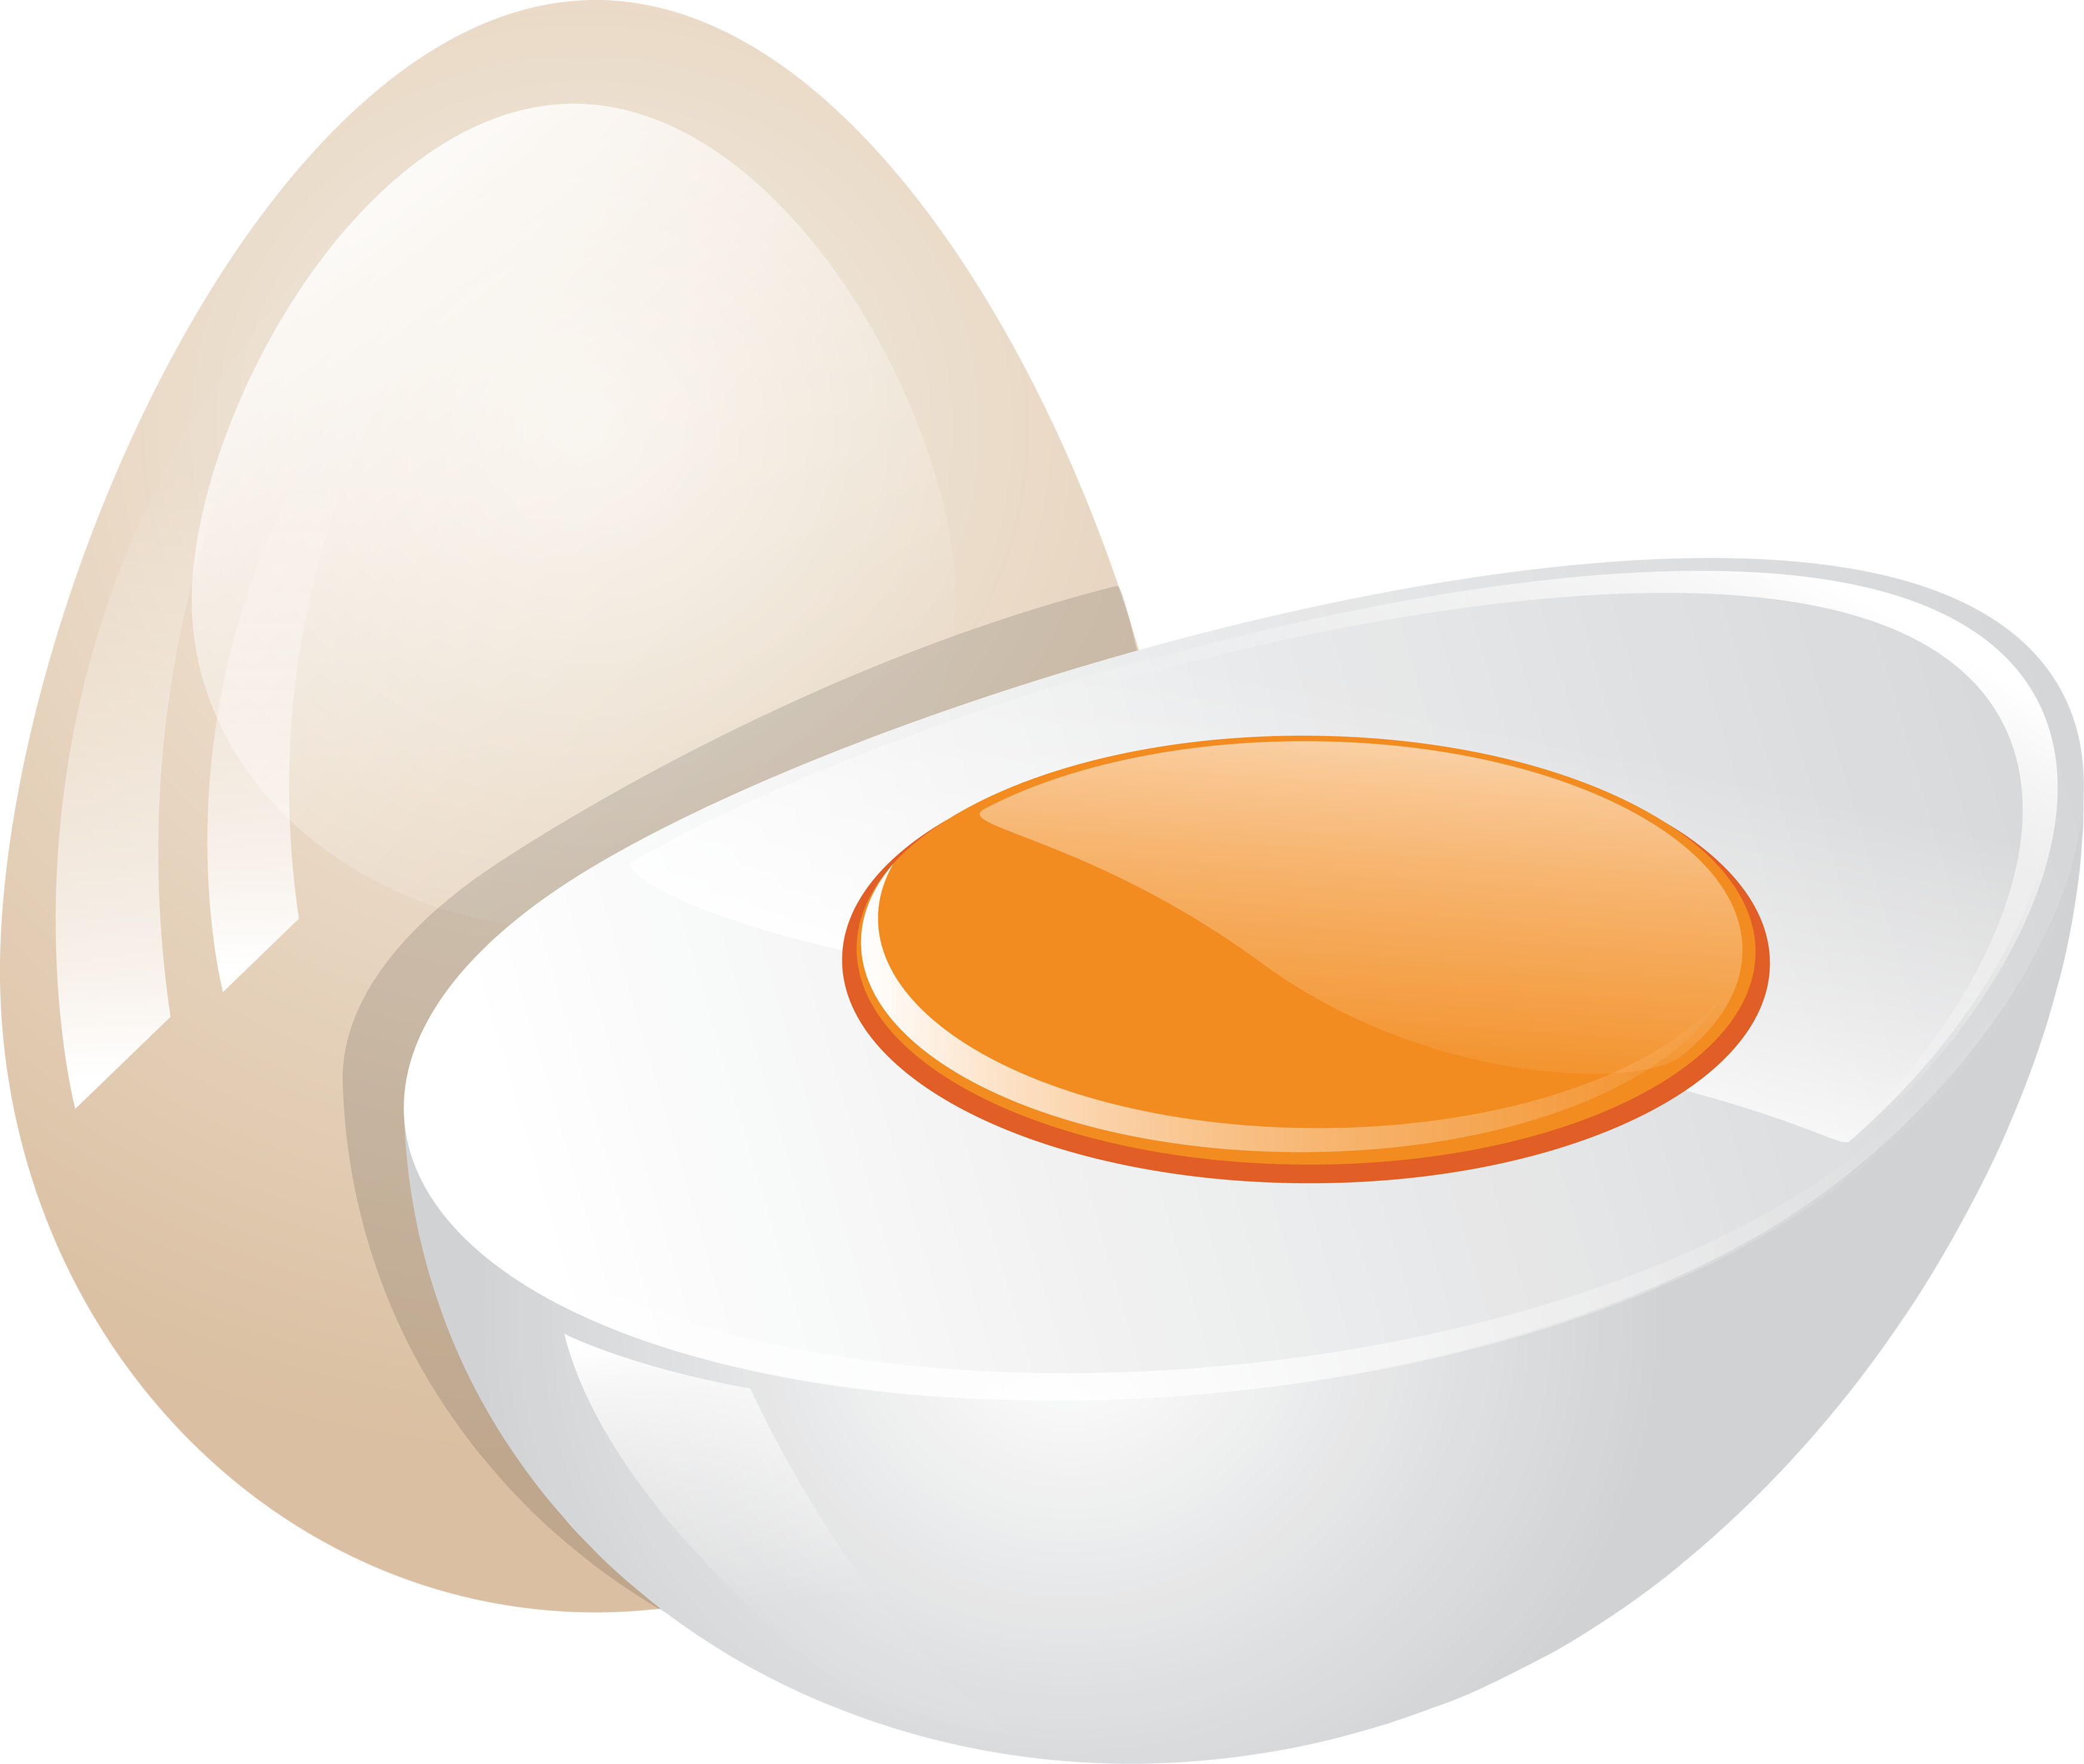 Soft boiled egg clipart. Free download transparent .PNG